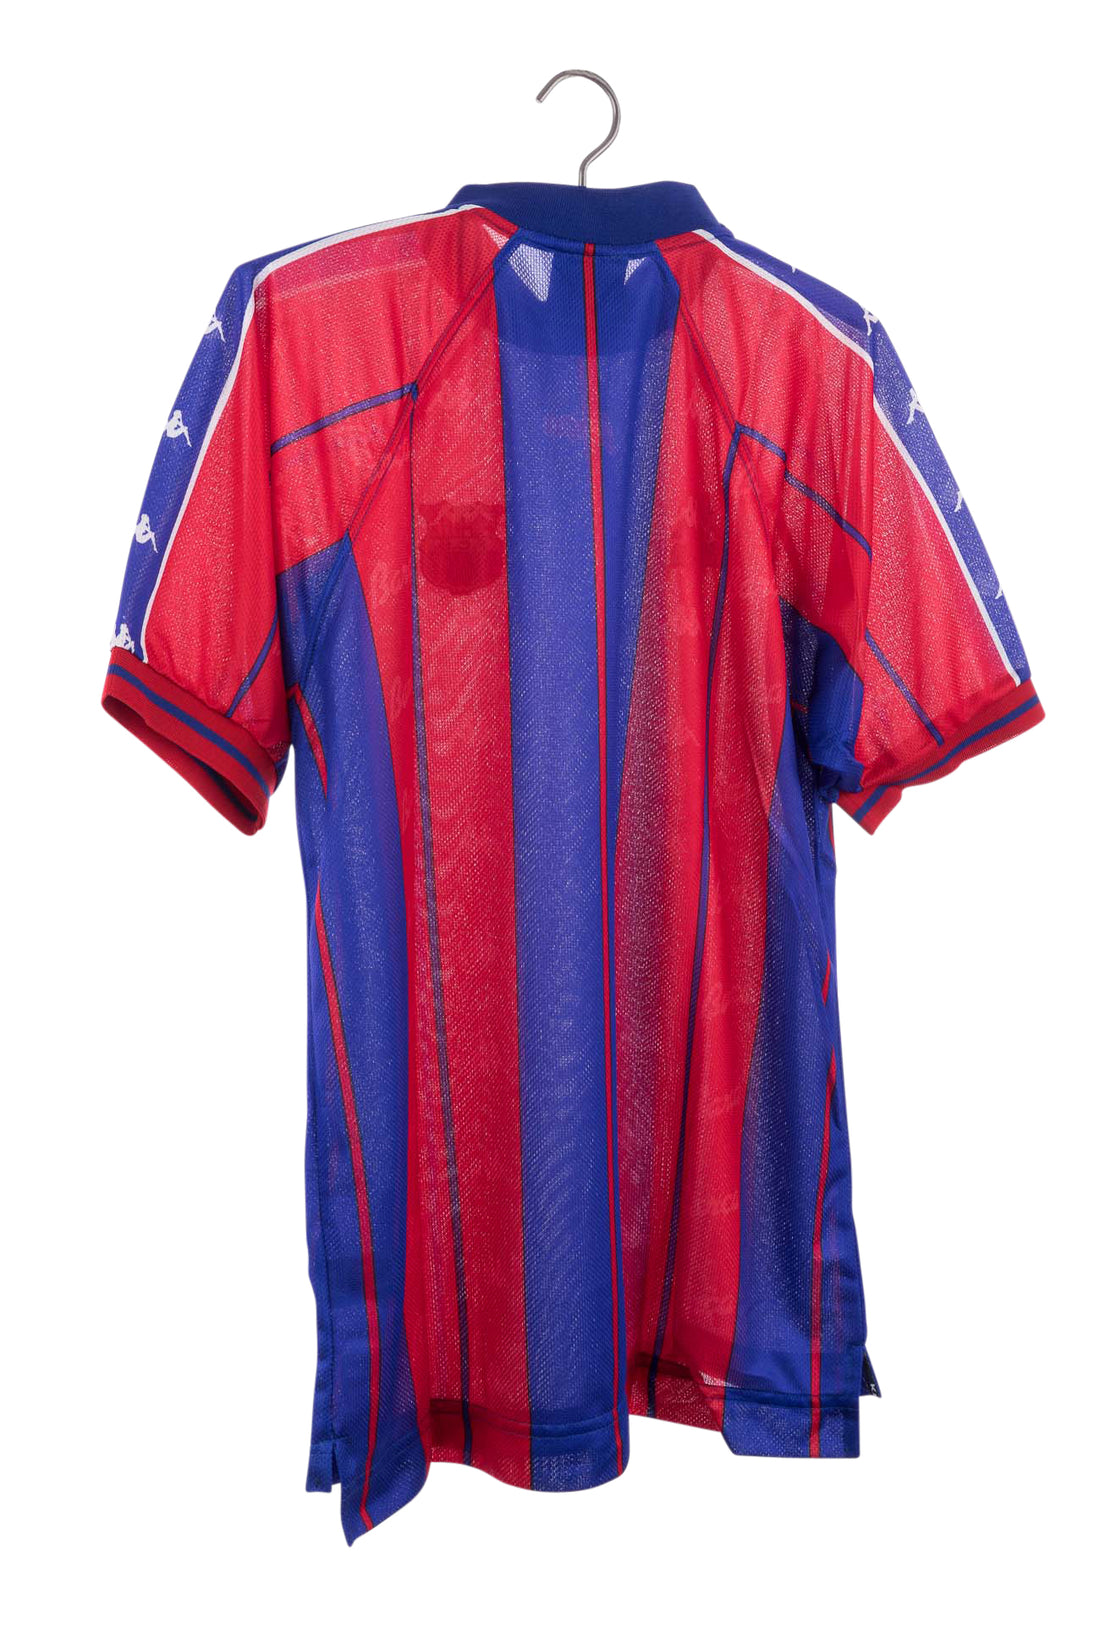 FC Barcelona 1997 - 1998 Home Football Shirt